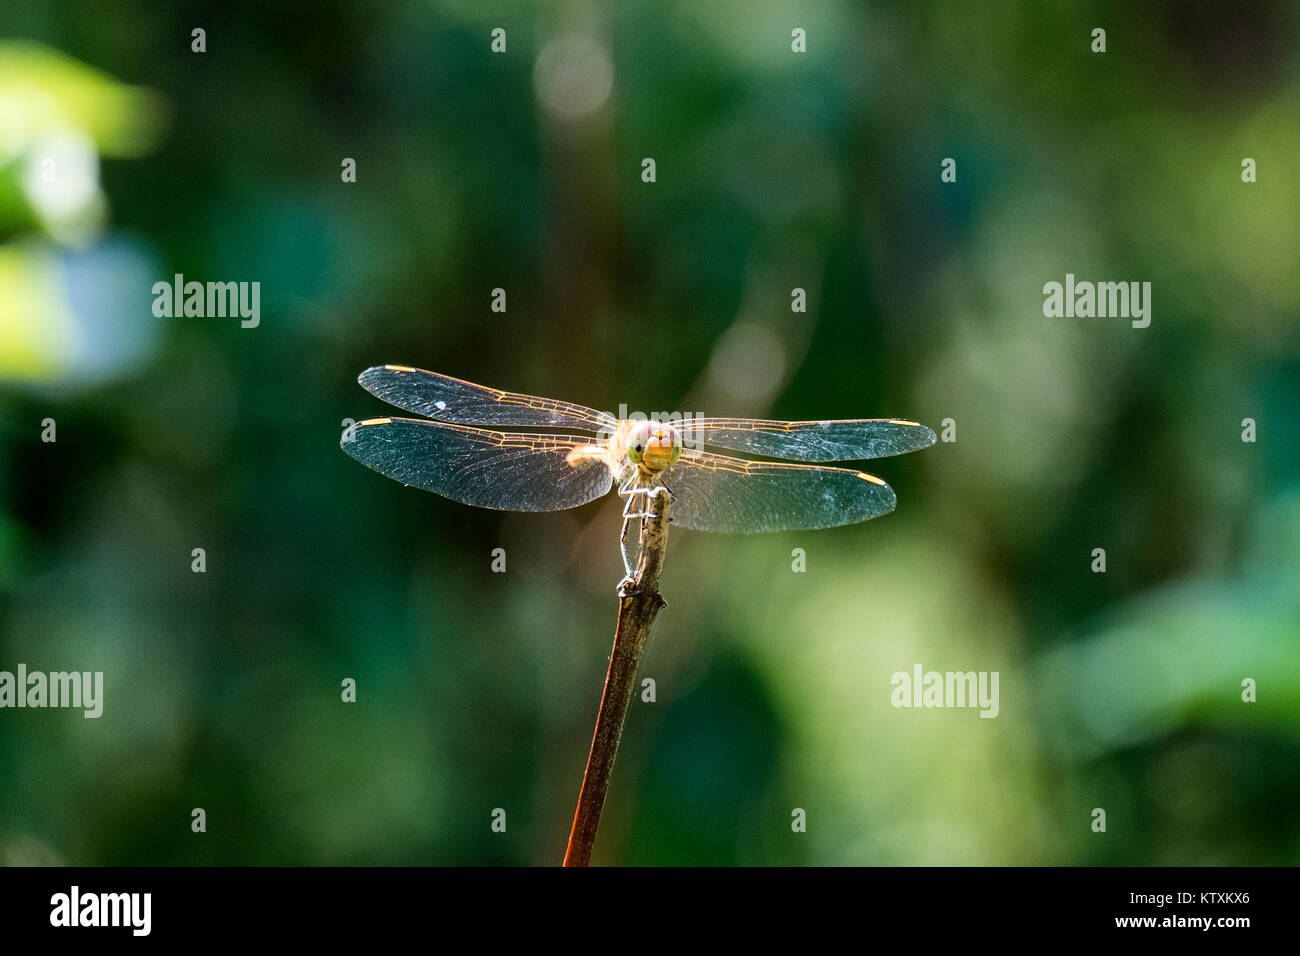 La libélula hembra leonada ruddy darter descansa sobre una rama (Sympetrum sanguineum) Foto de stock